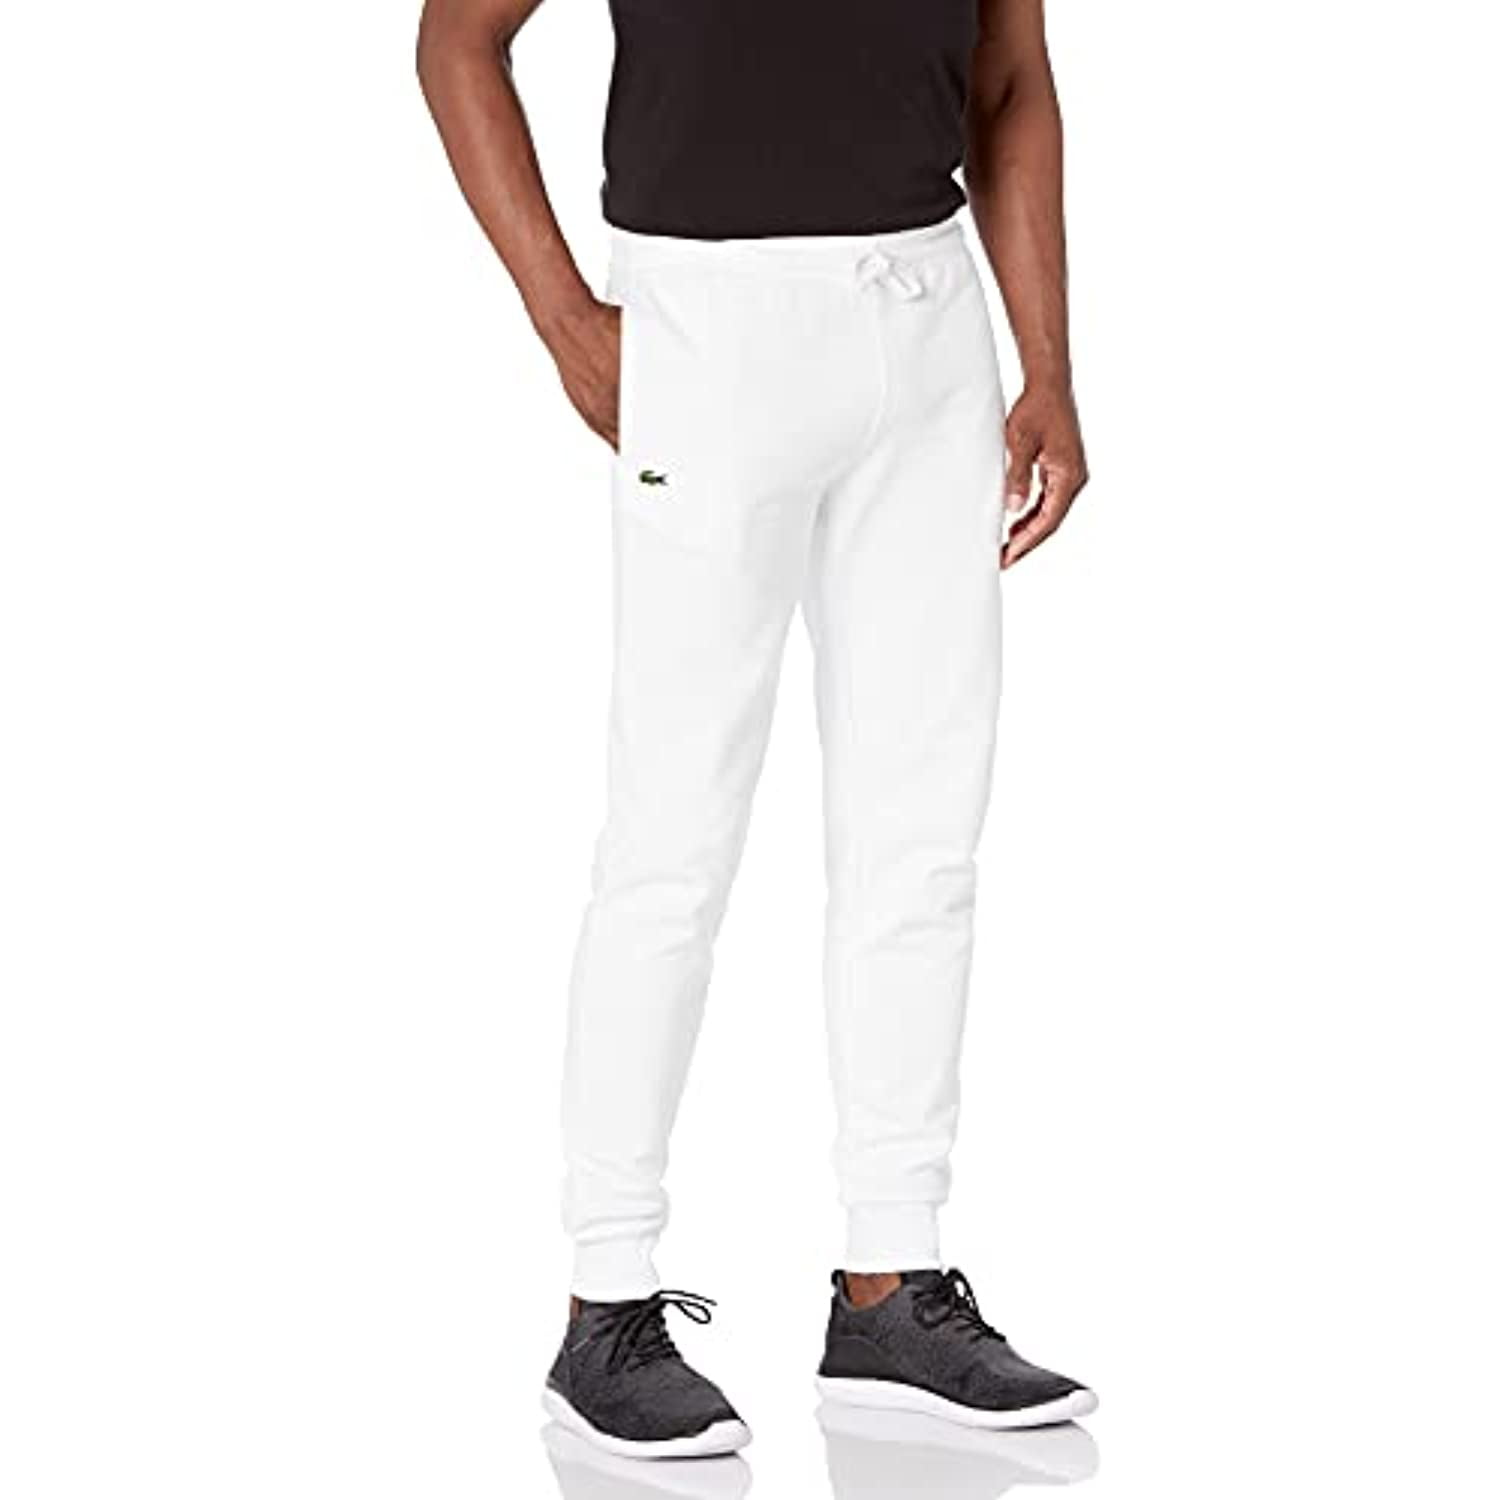 Men's Sport Fleece Jogger Sweatpants, White, 4X-Large -